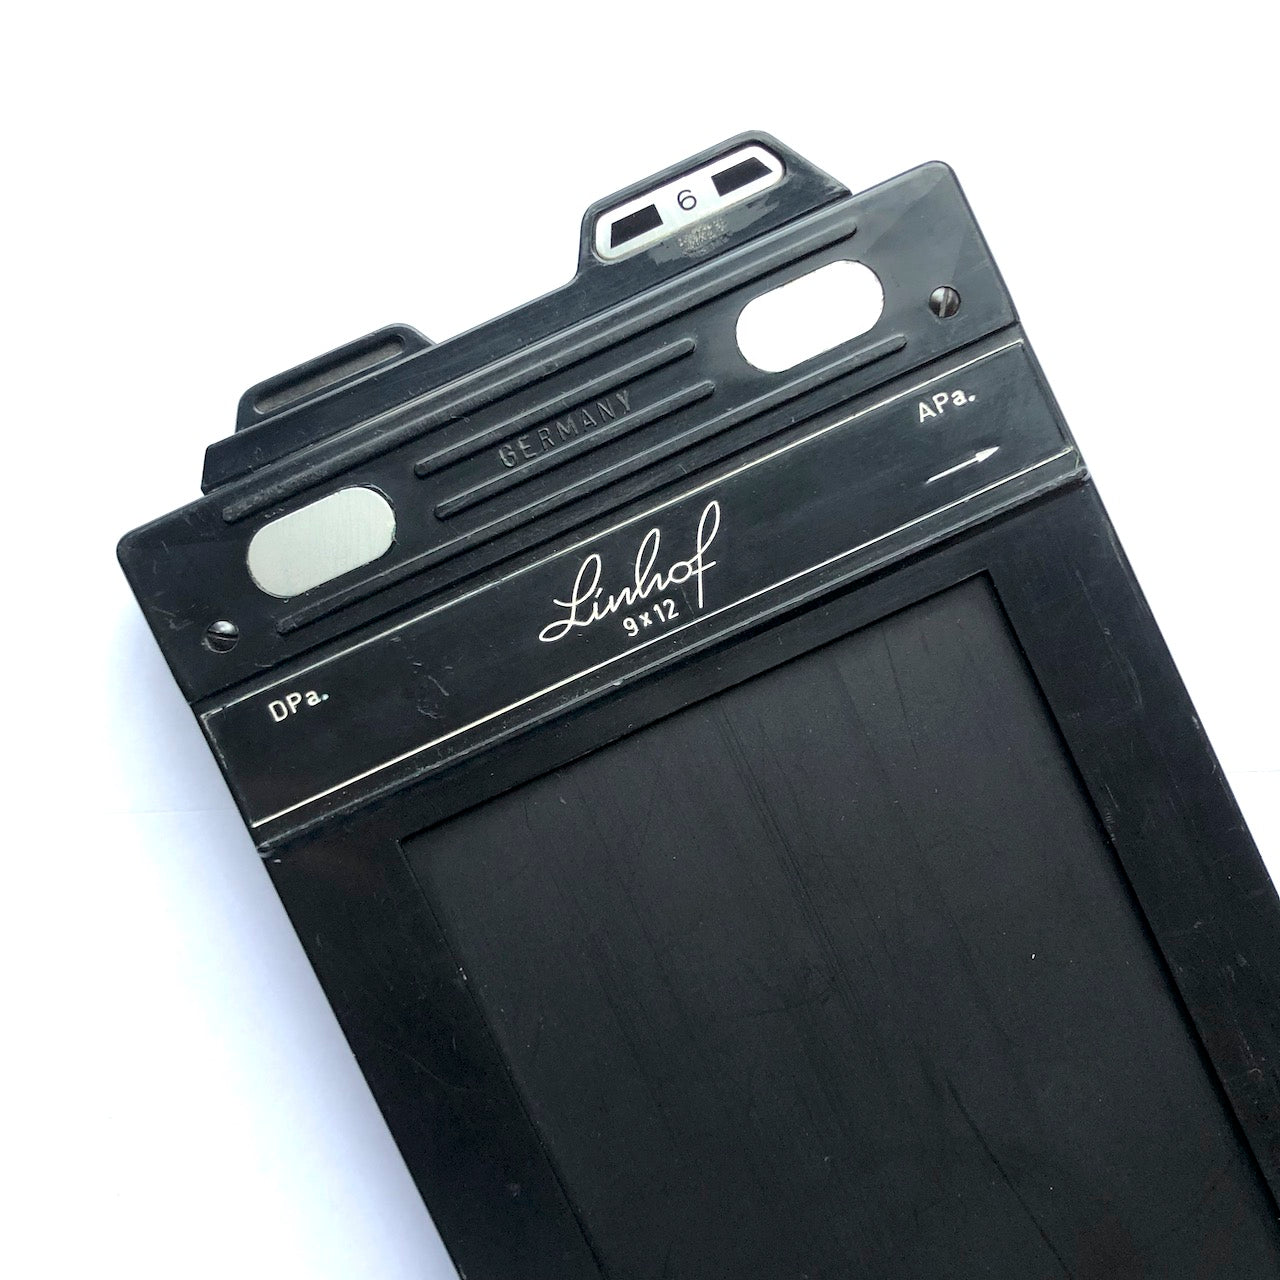 Linhof 9x12cm sheet film holders